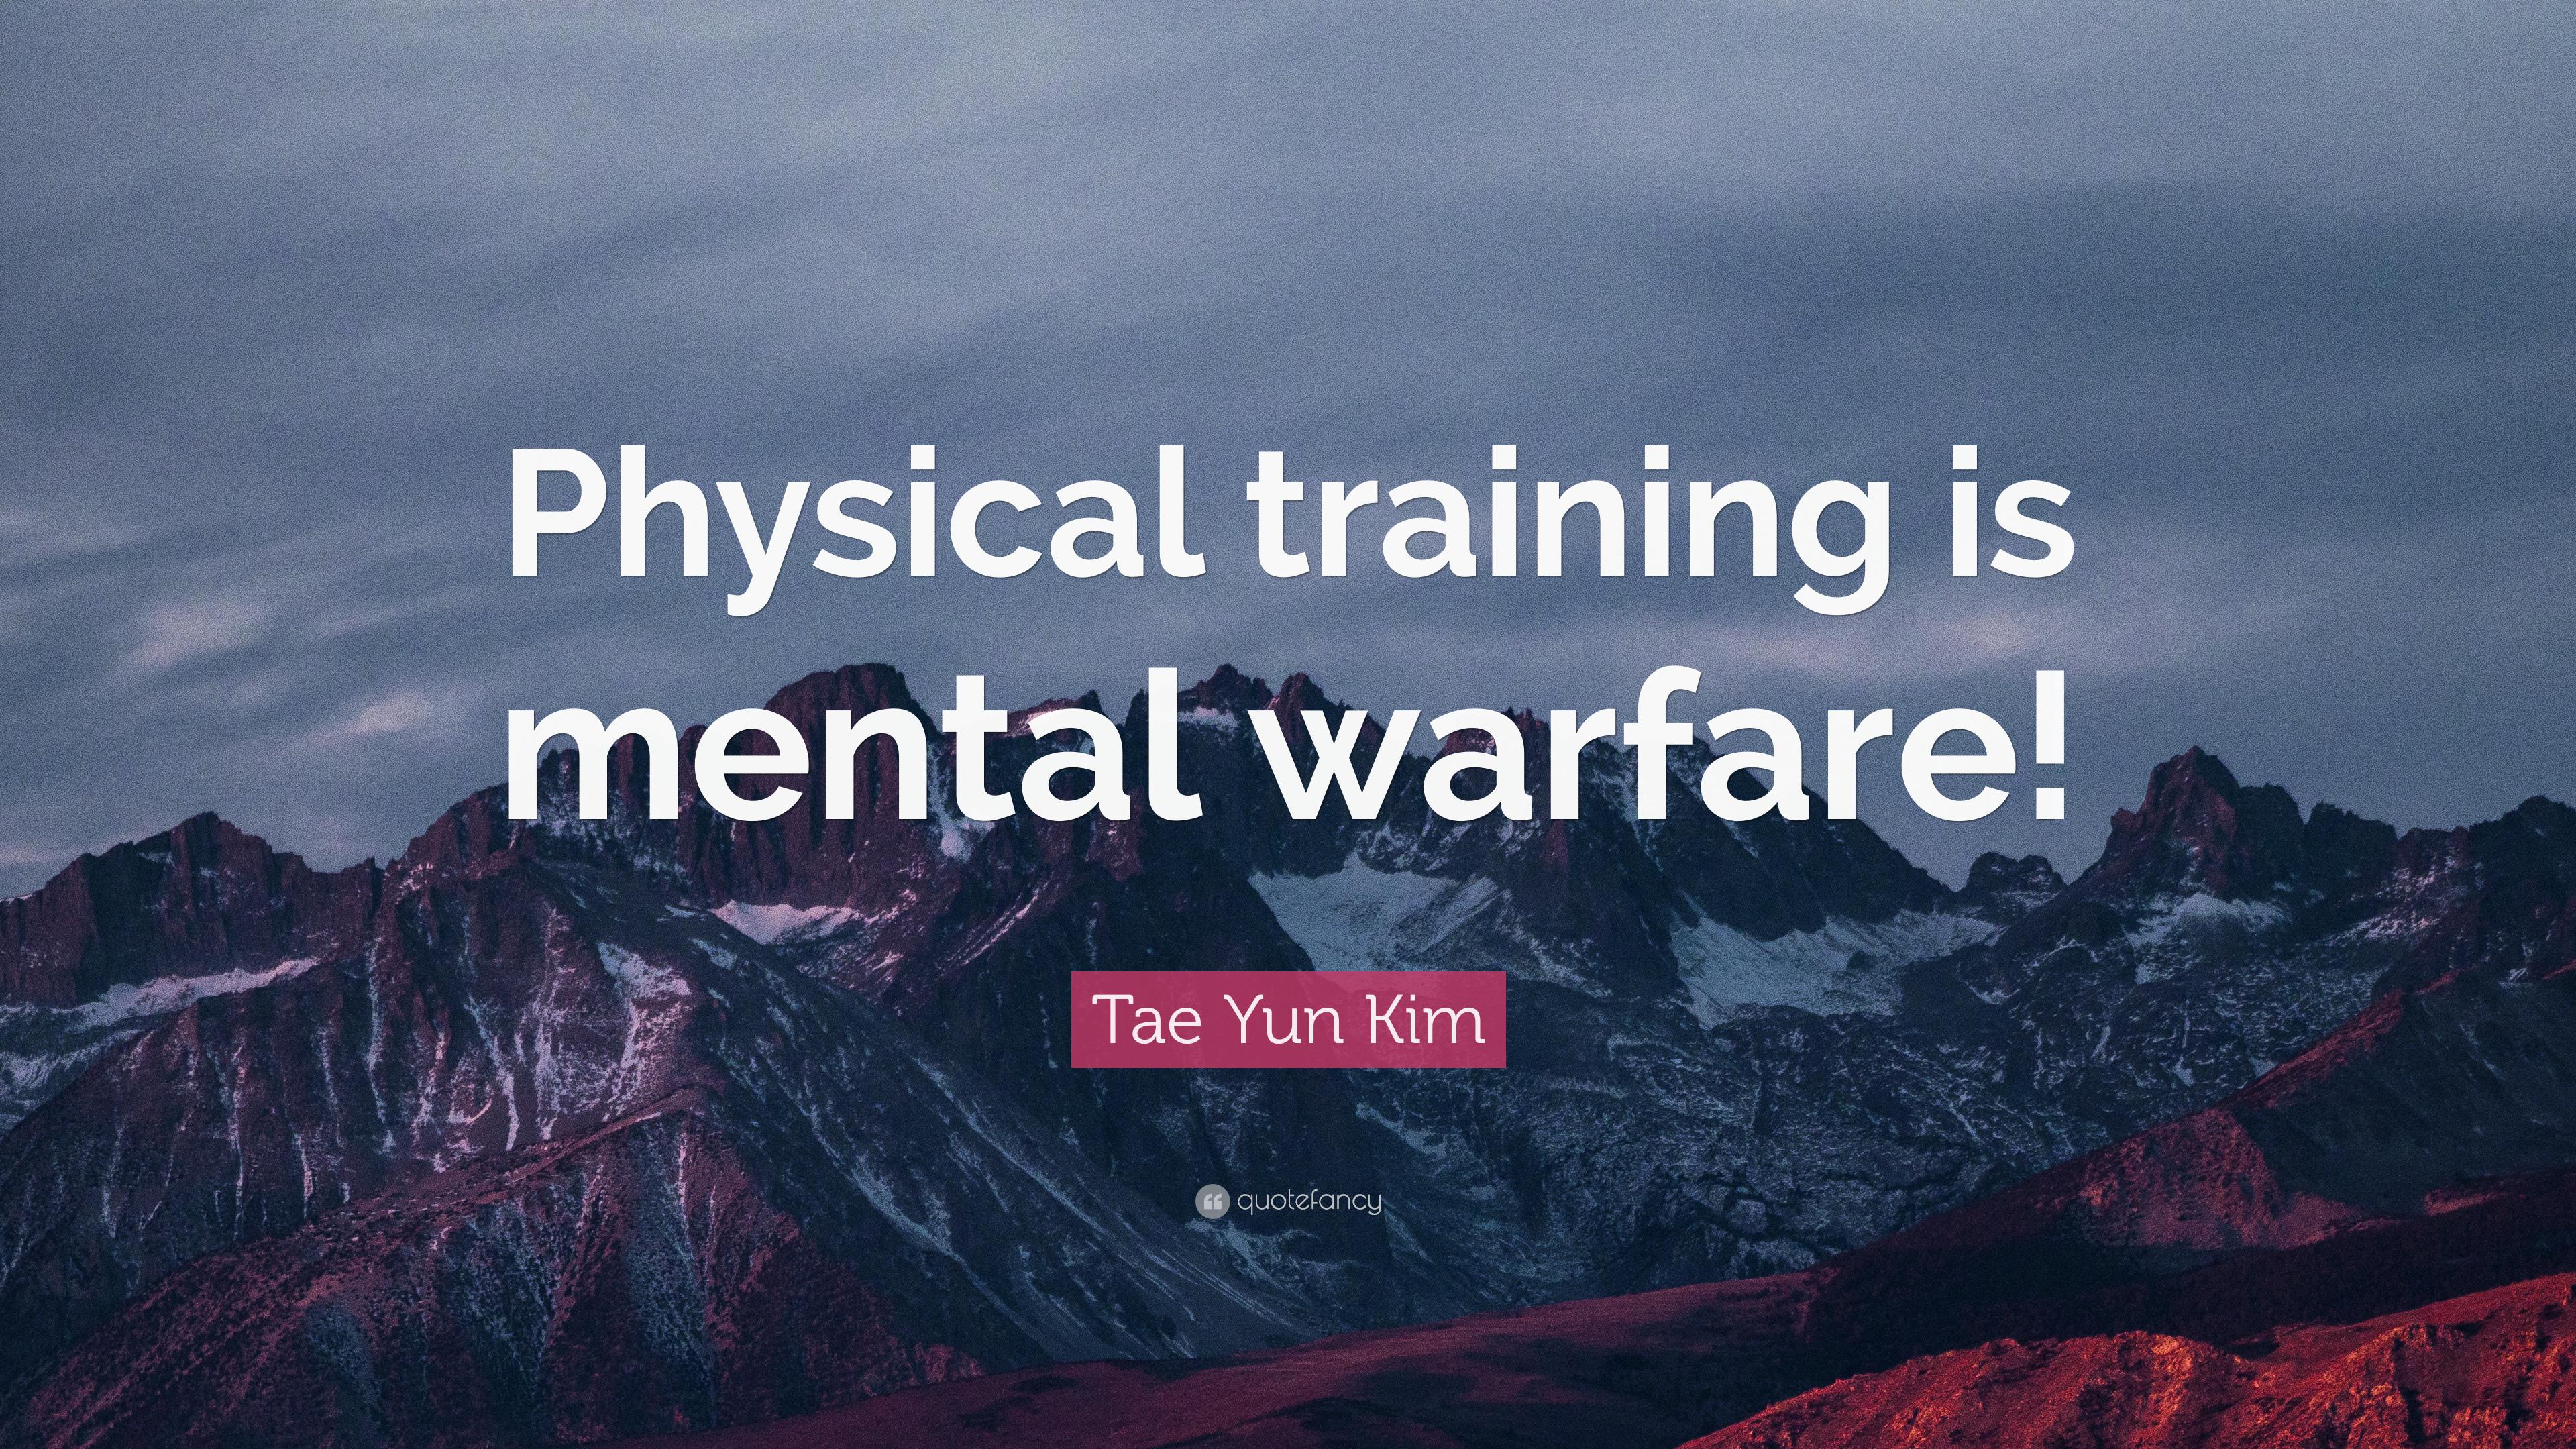 Tae Yun Kim Quote: “Physical training is mental warfare!” 9